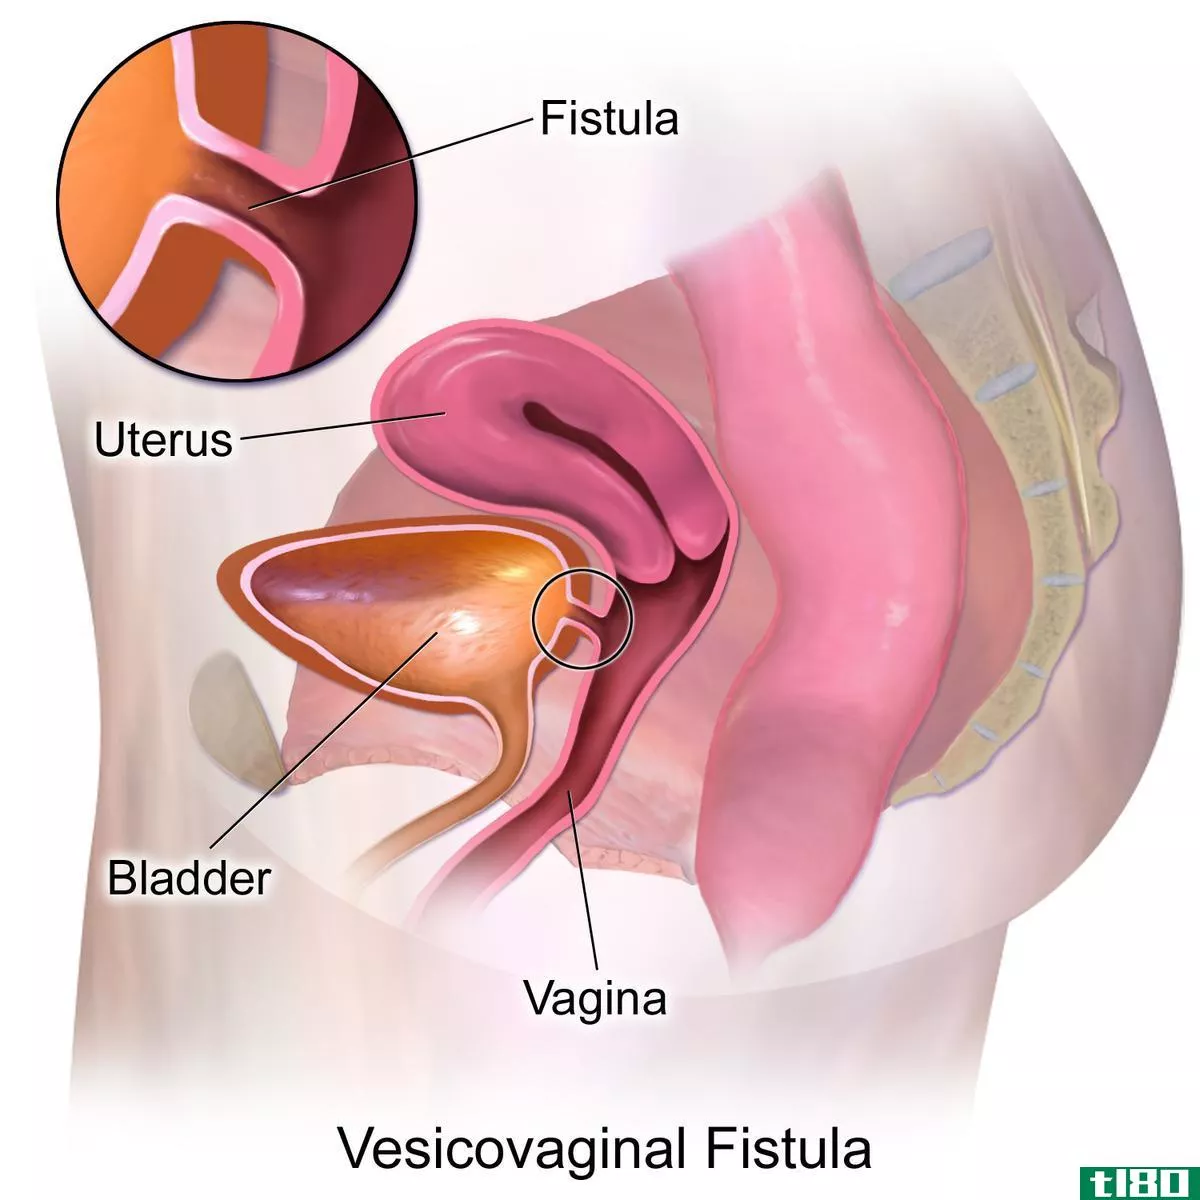 瘘管(fistula)和分流器(shunt)的区别